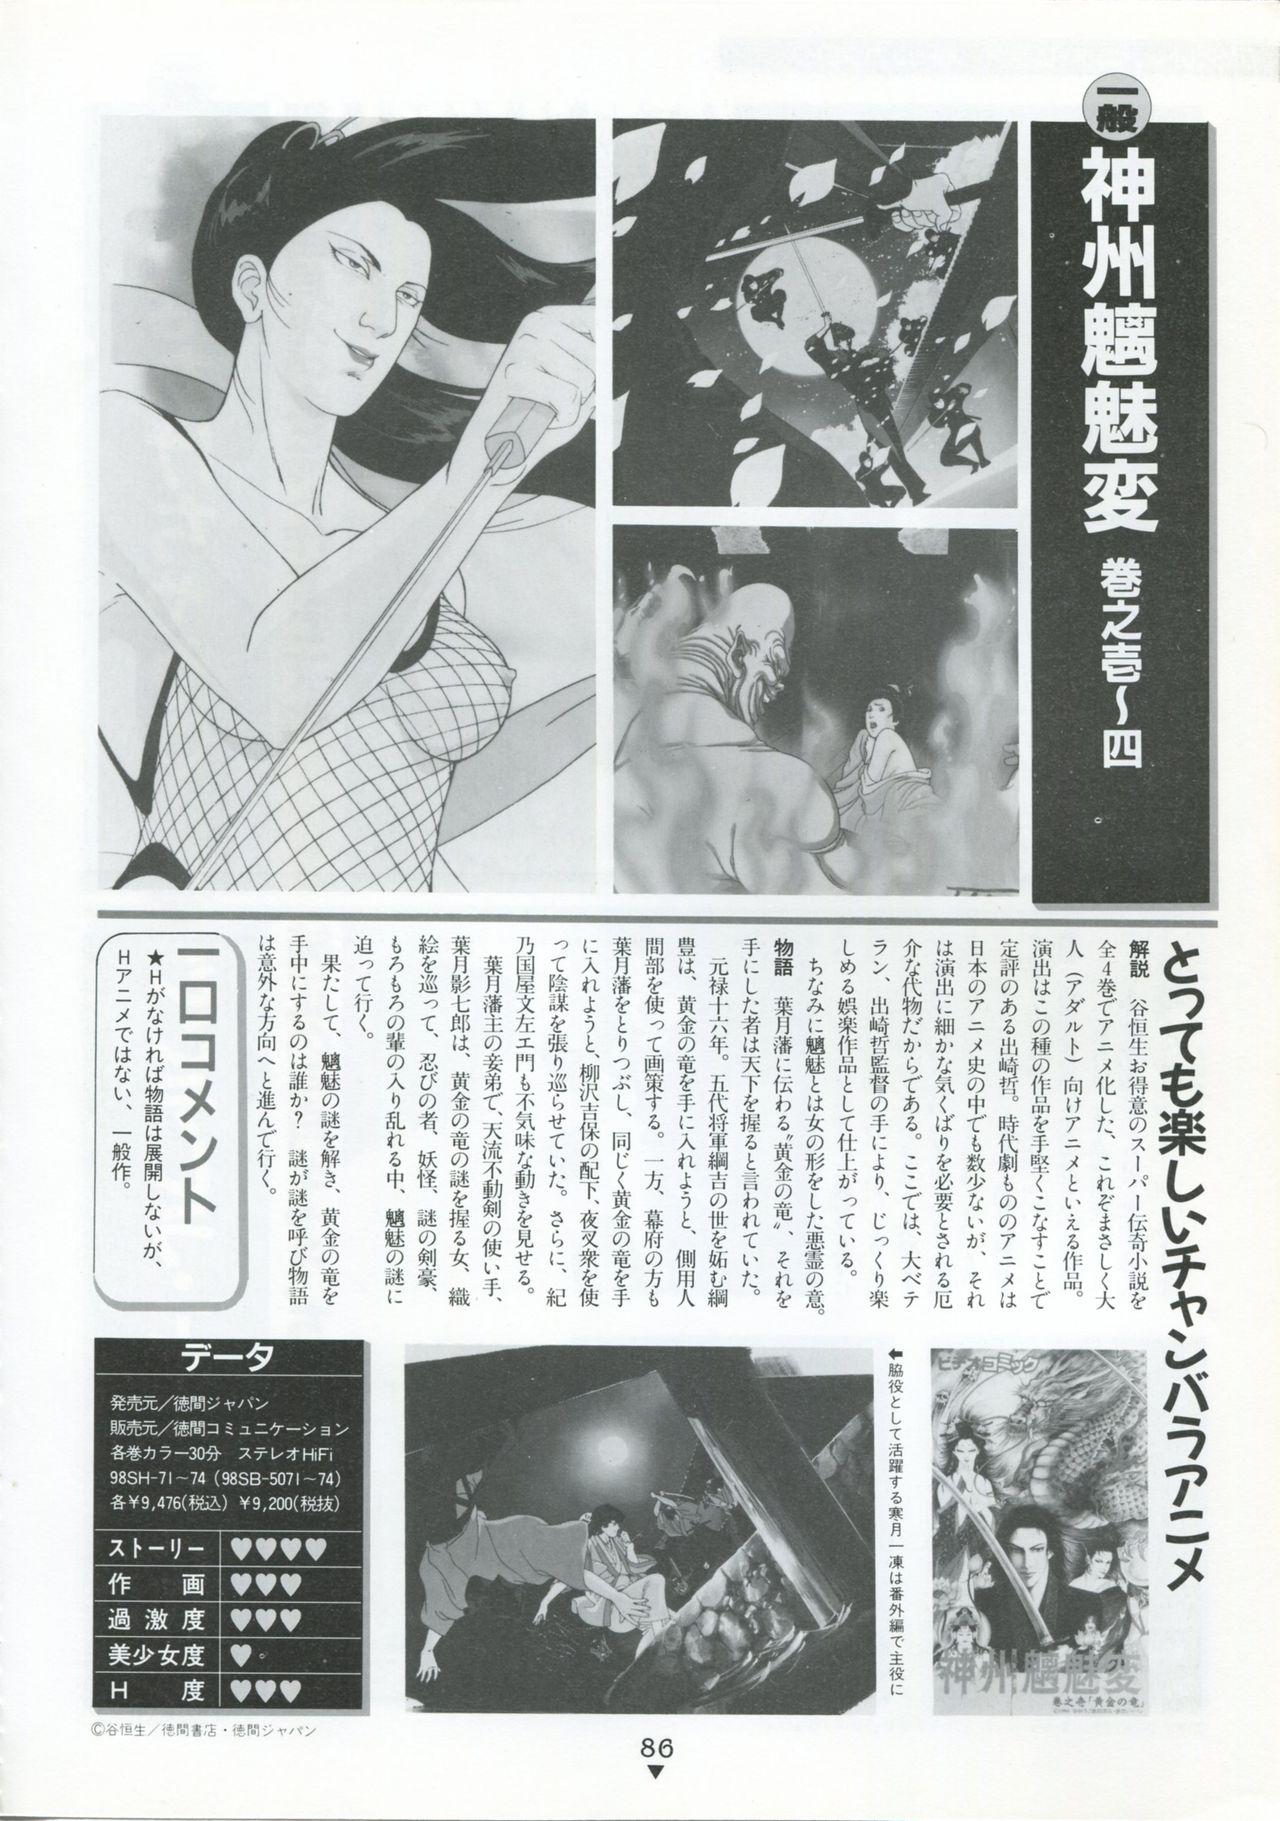 Bishoujo Anime Daizenshuu - Adult Animation Video Catalog 1991 81